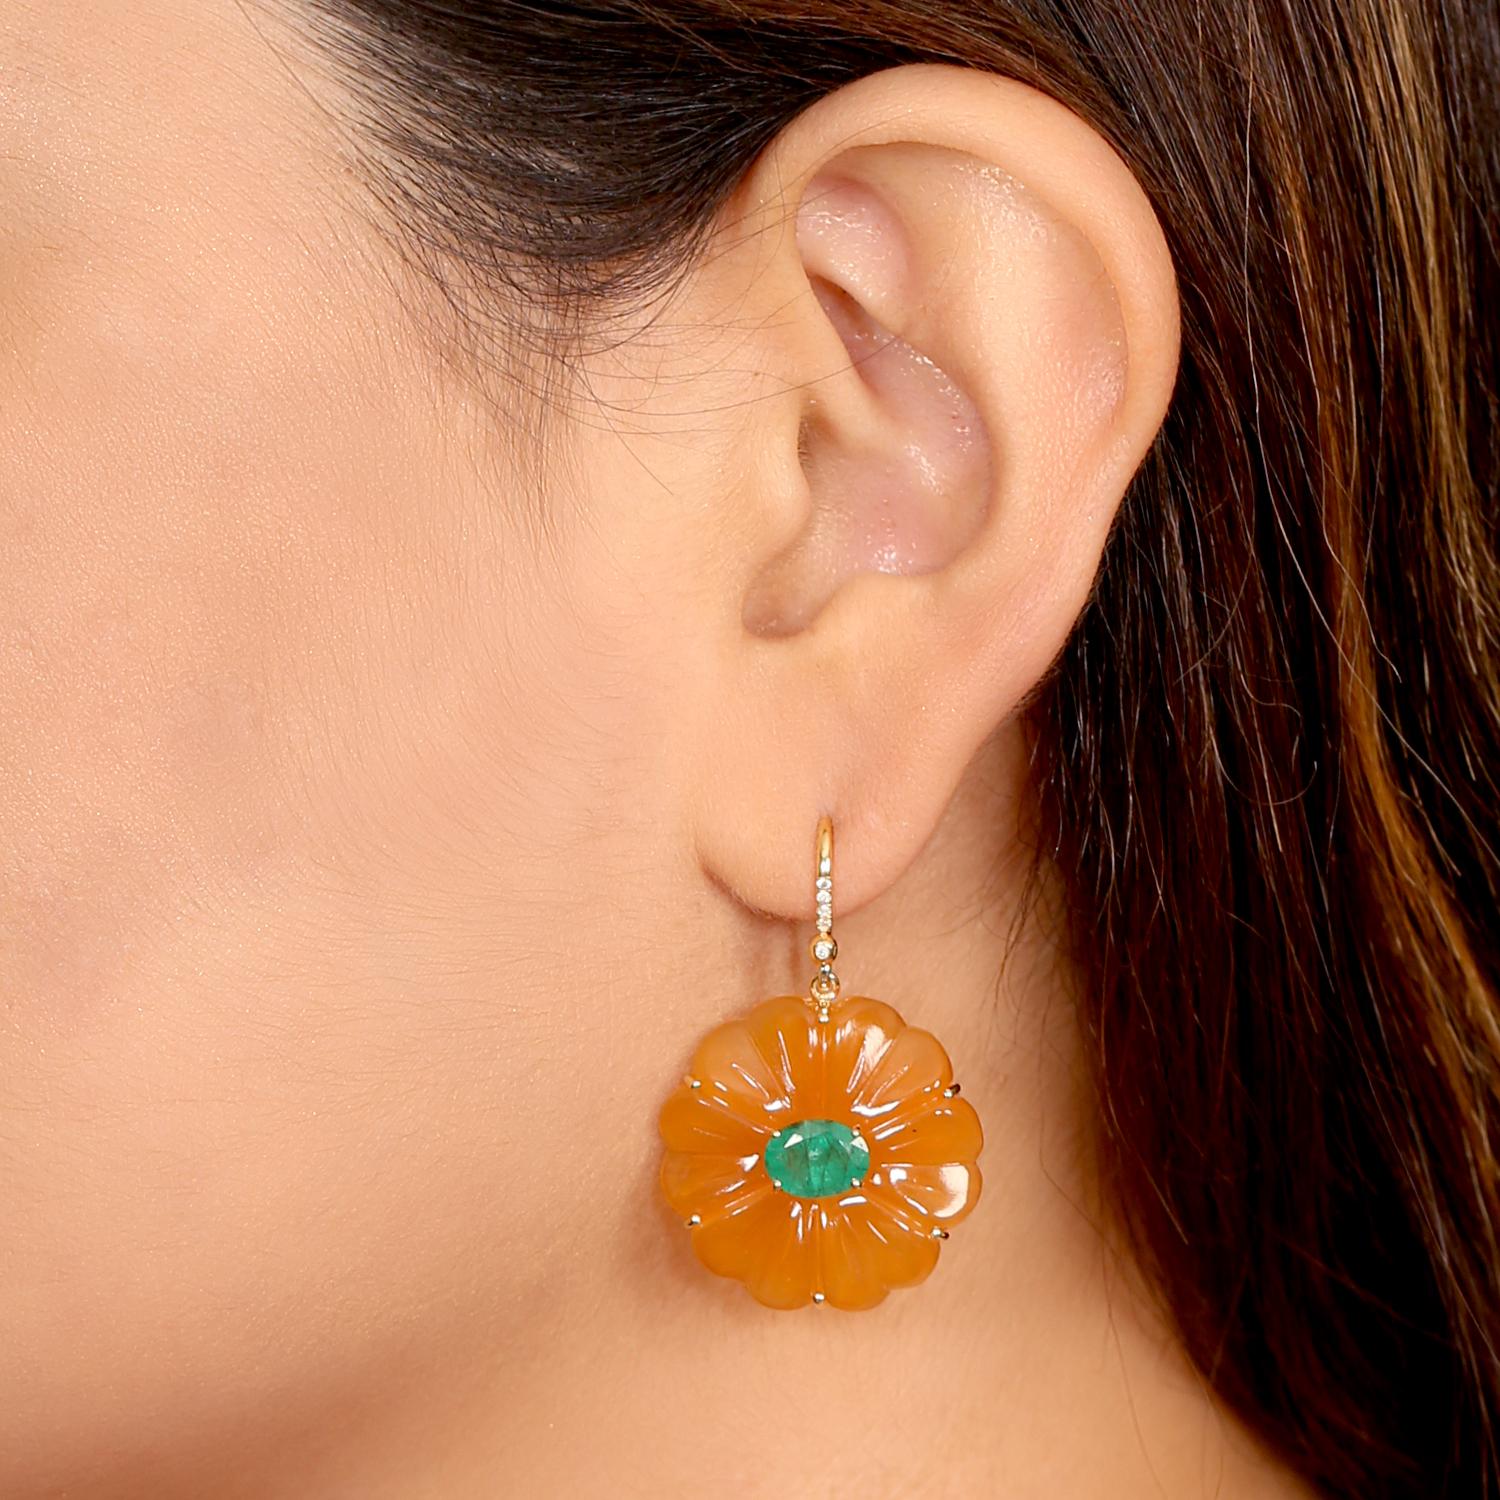 .05 carat diamond earrings